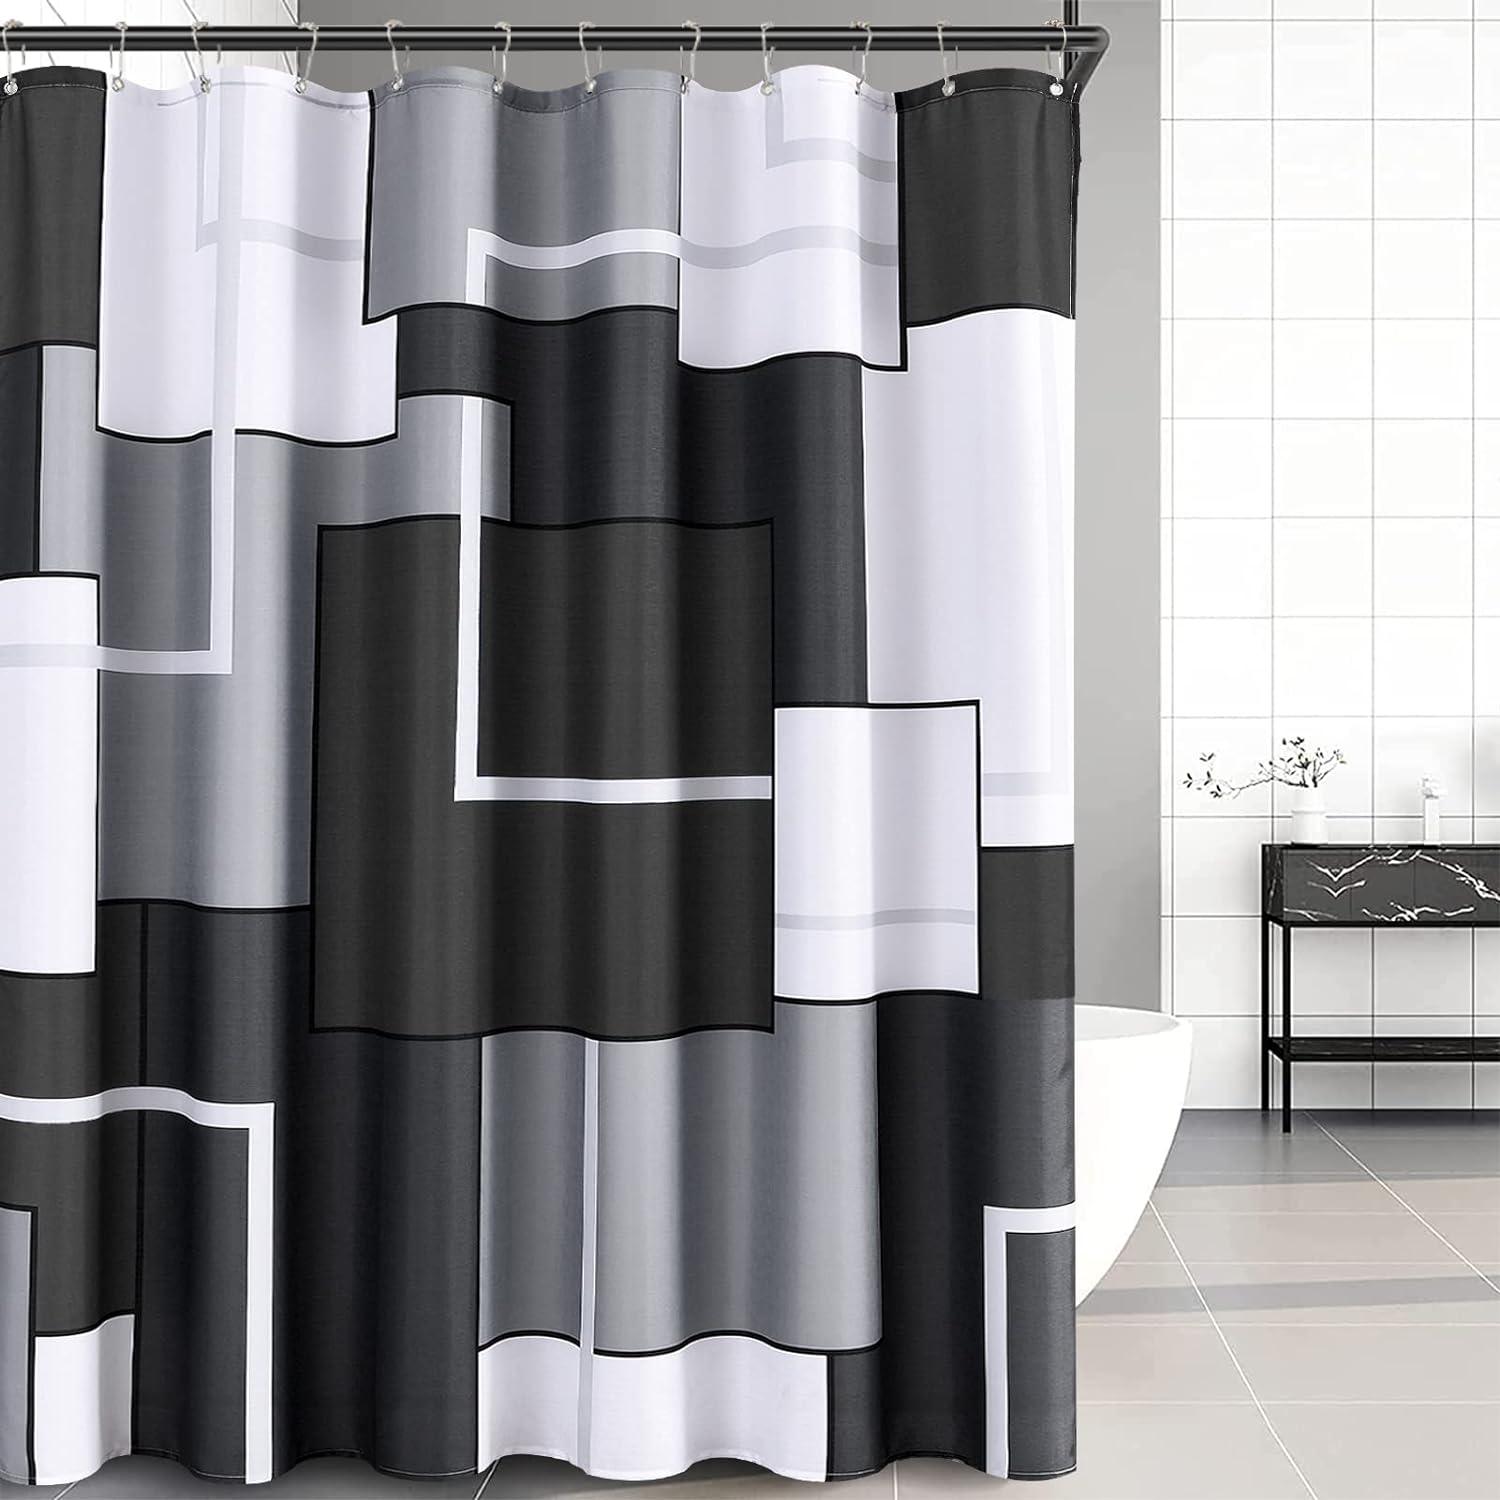  Cortinas de ducha modernas de color gris oscuro, impermeable,  cortina de baño de color sólido para baño, bañera, baño grande y ancho de  43 x 87 pulgadas, color negro : Hogar